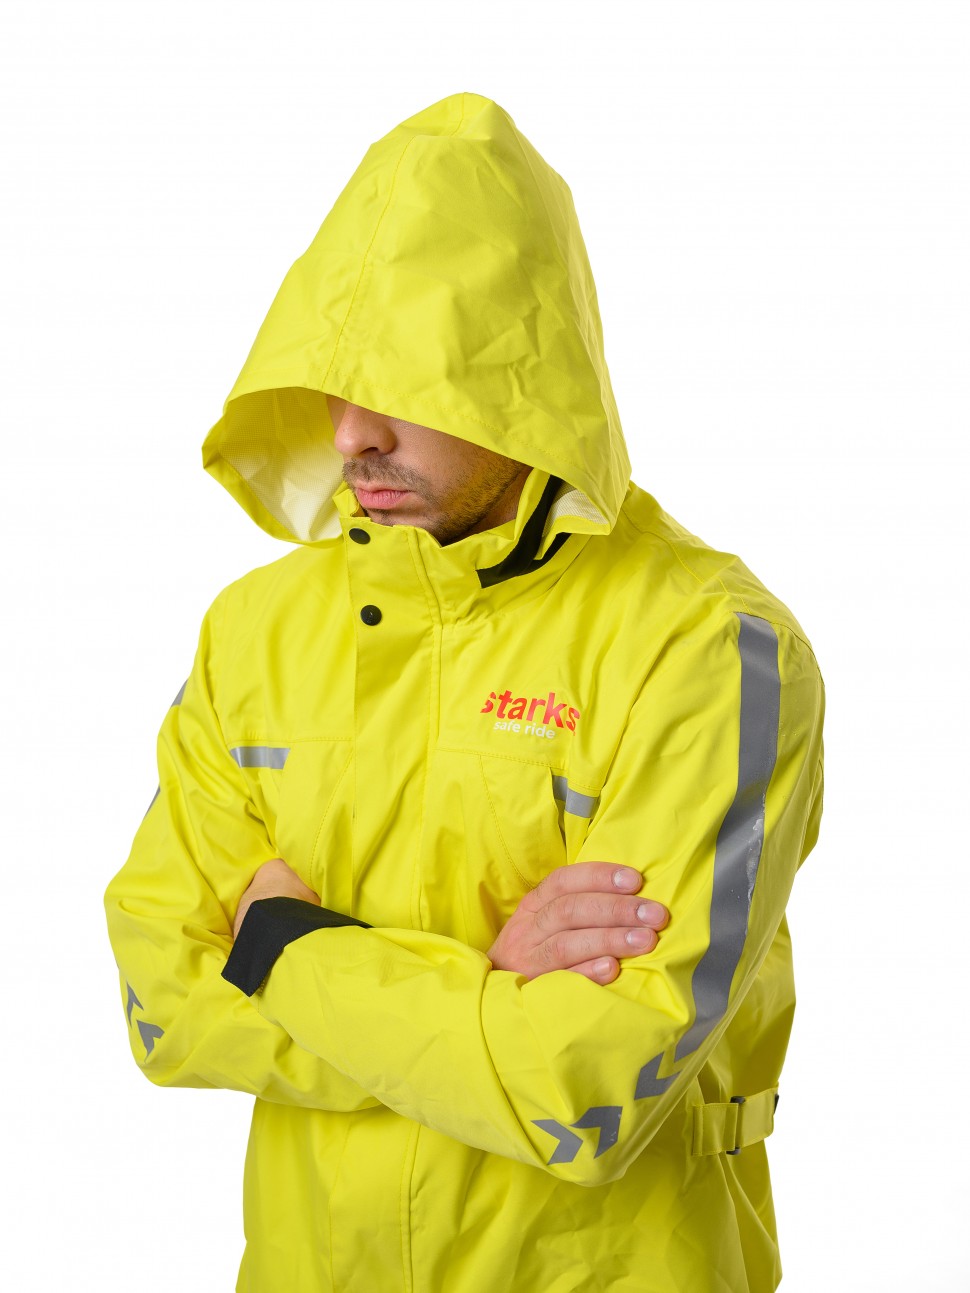 фото Starks starks мото дождевик rain city, цвет желтый/черный (куртка+брюки), размер 2xl